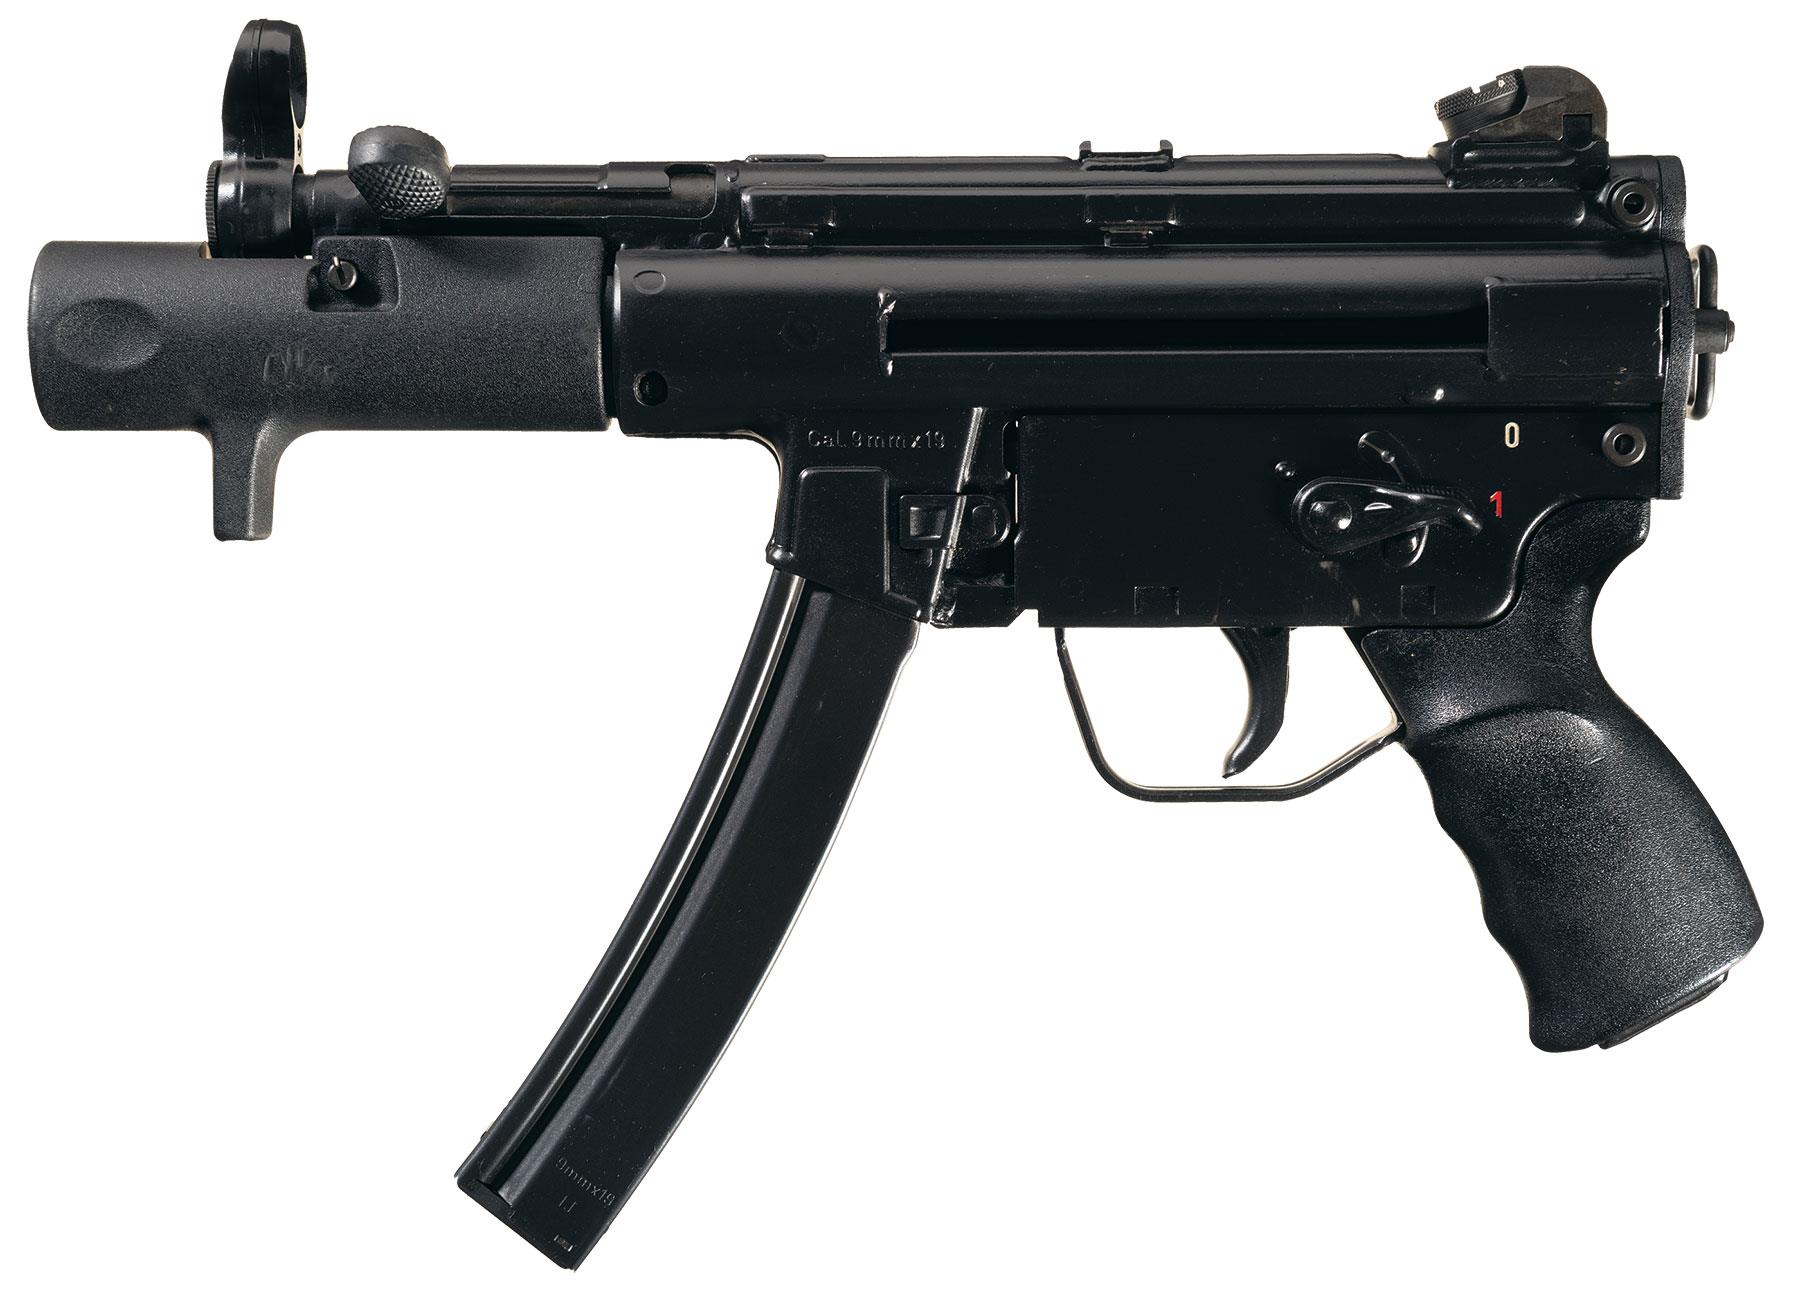 Original Pre-Ban Heckler & Koch SP89 Semi-Automatic Pistol.